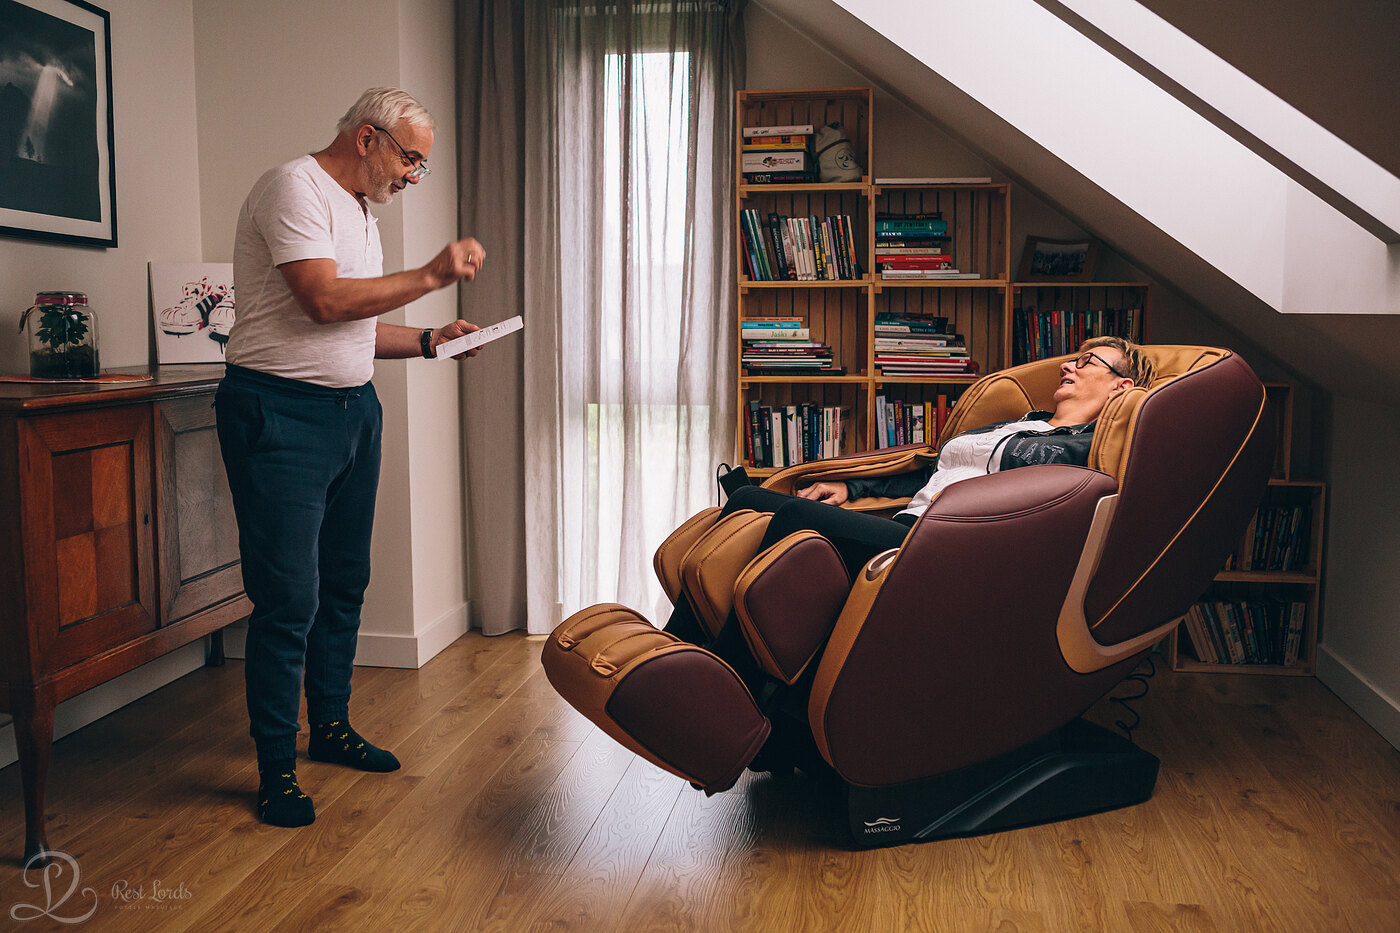 Massage chair for grandpa and grandma